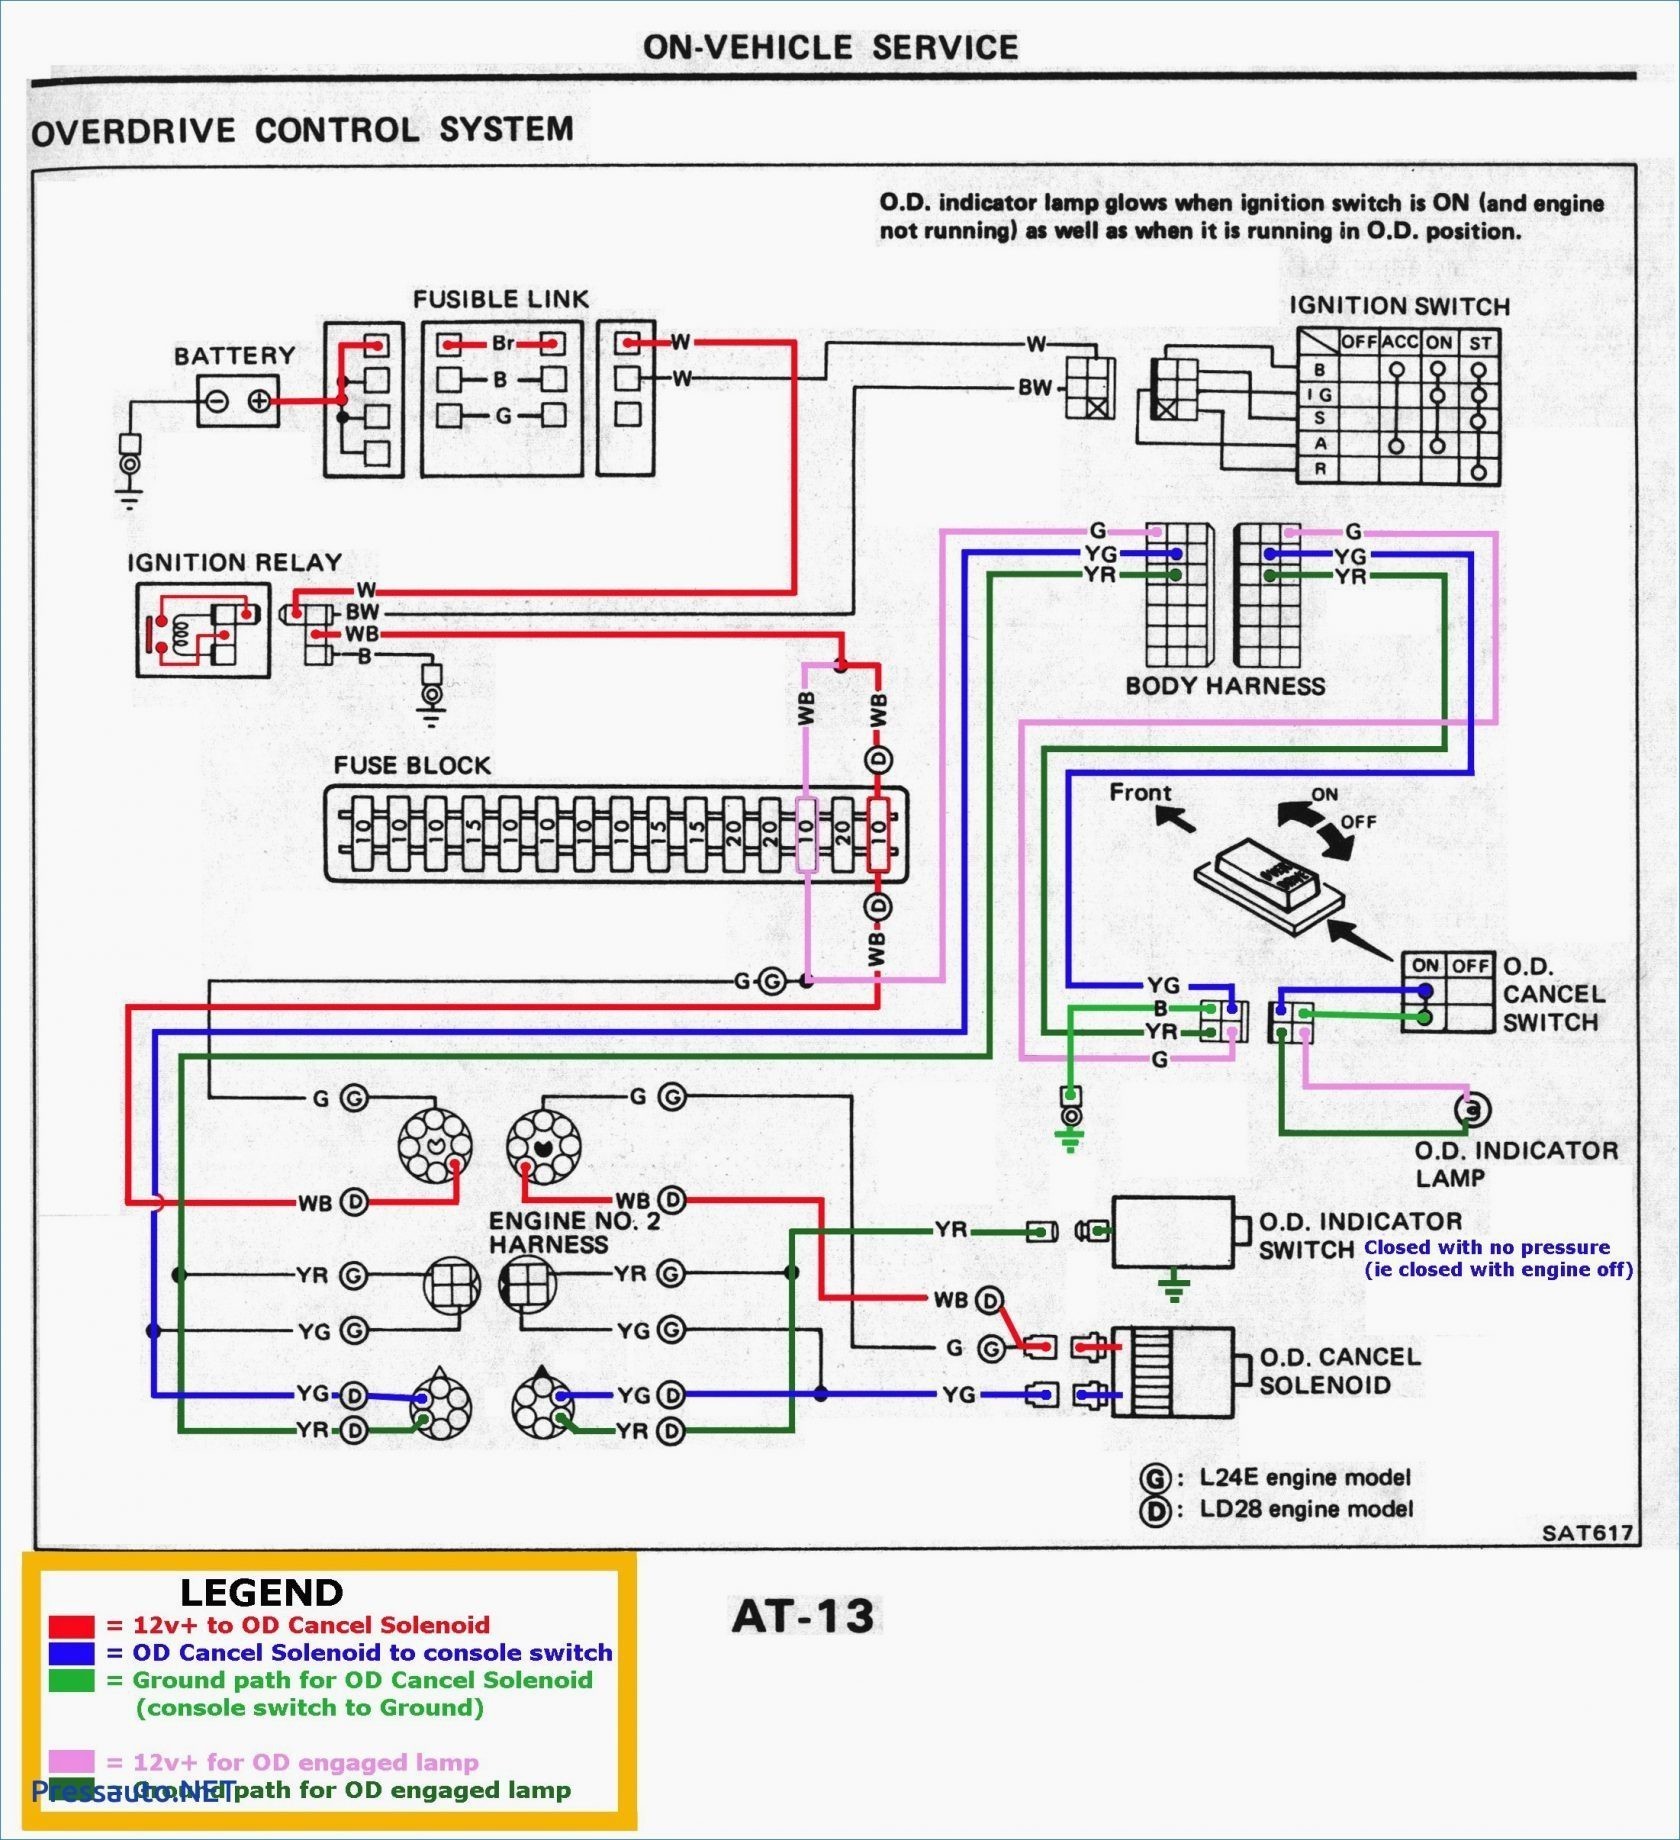 2002 Chevy Trailblazer Engine Diagram Bose Wiring Diagrams Of 2002 Chevy Trailblazer Engine Diagram